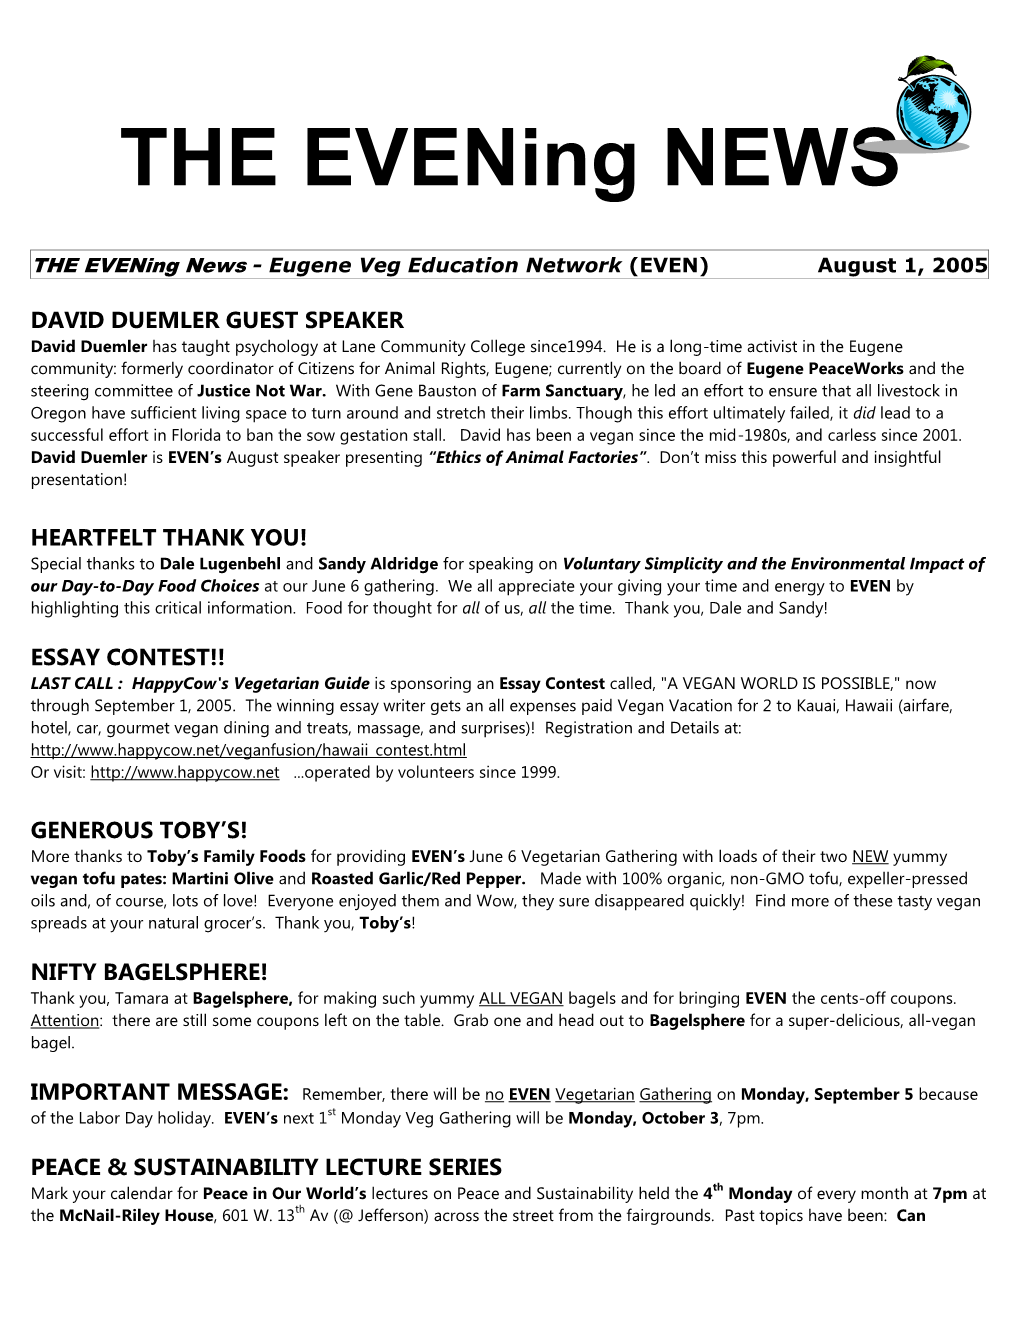 THE Eveningnews